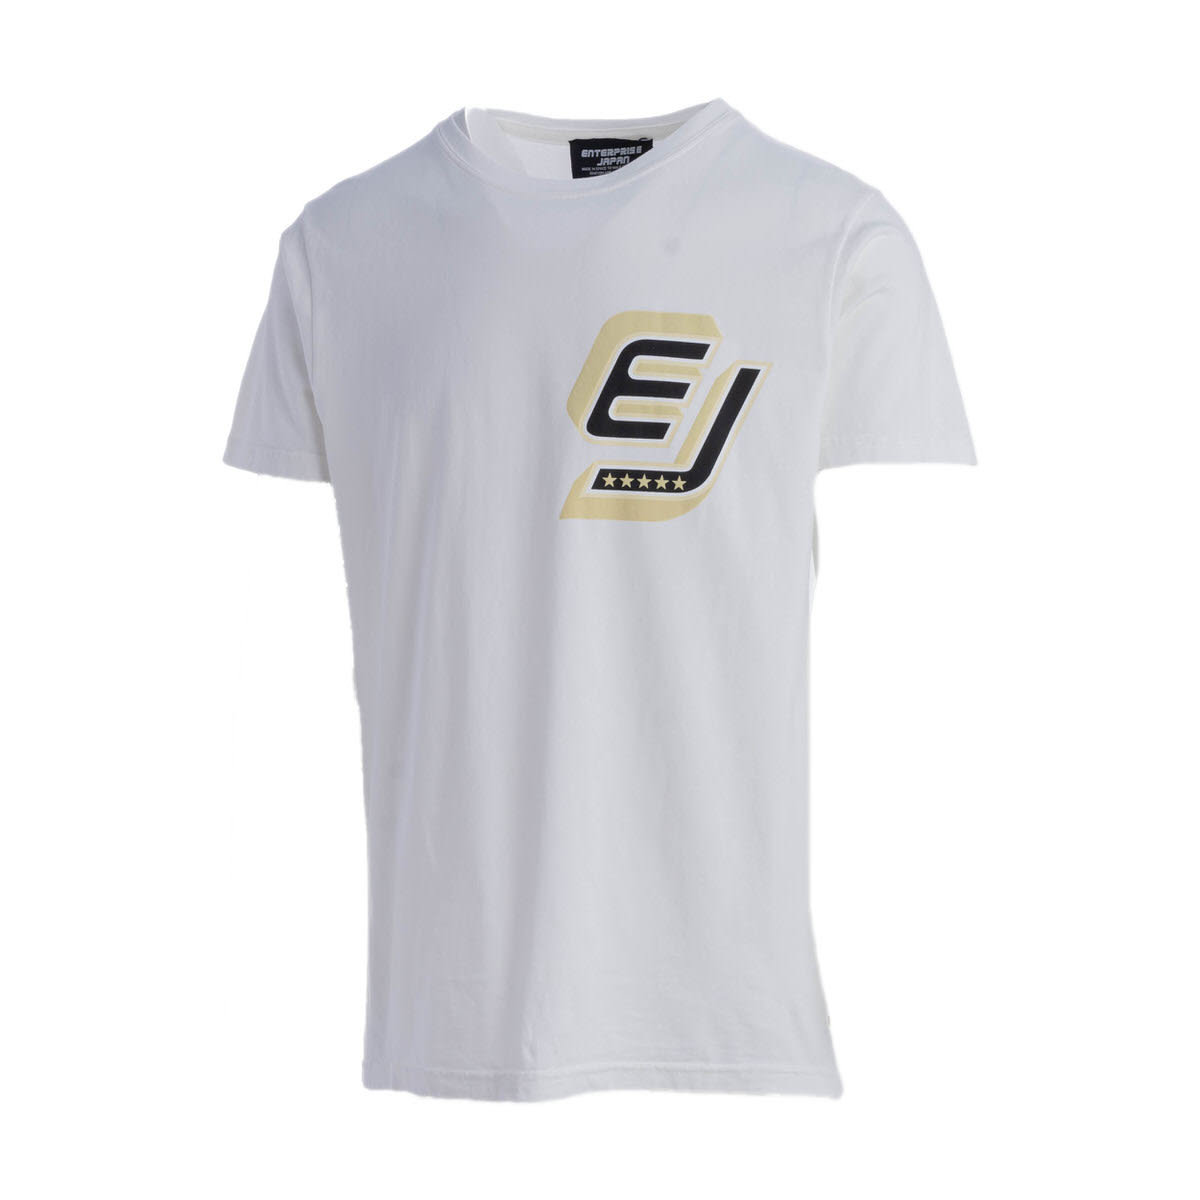 Cotton T-shirt Enterprise Japan Drop 3 Starring Sfera Ebbasta tee Milk